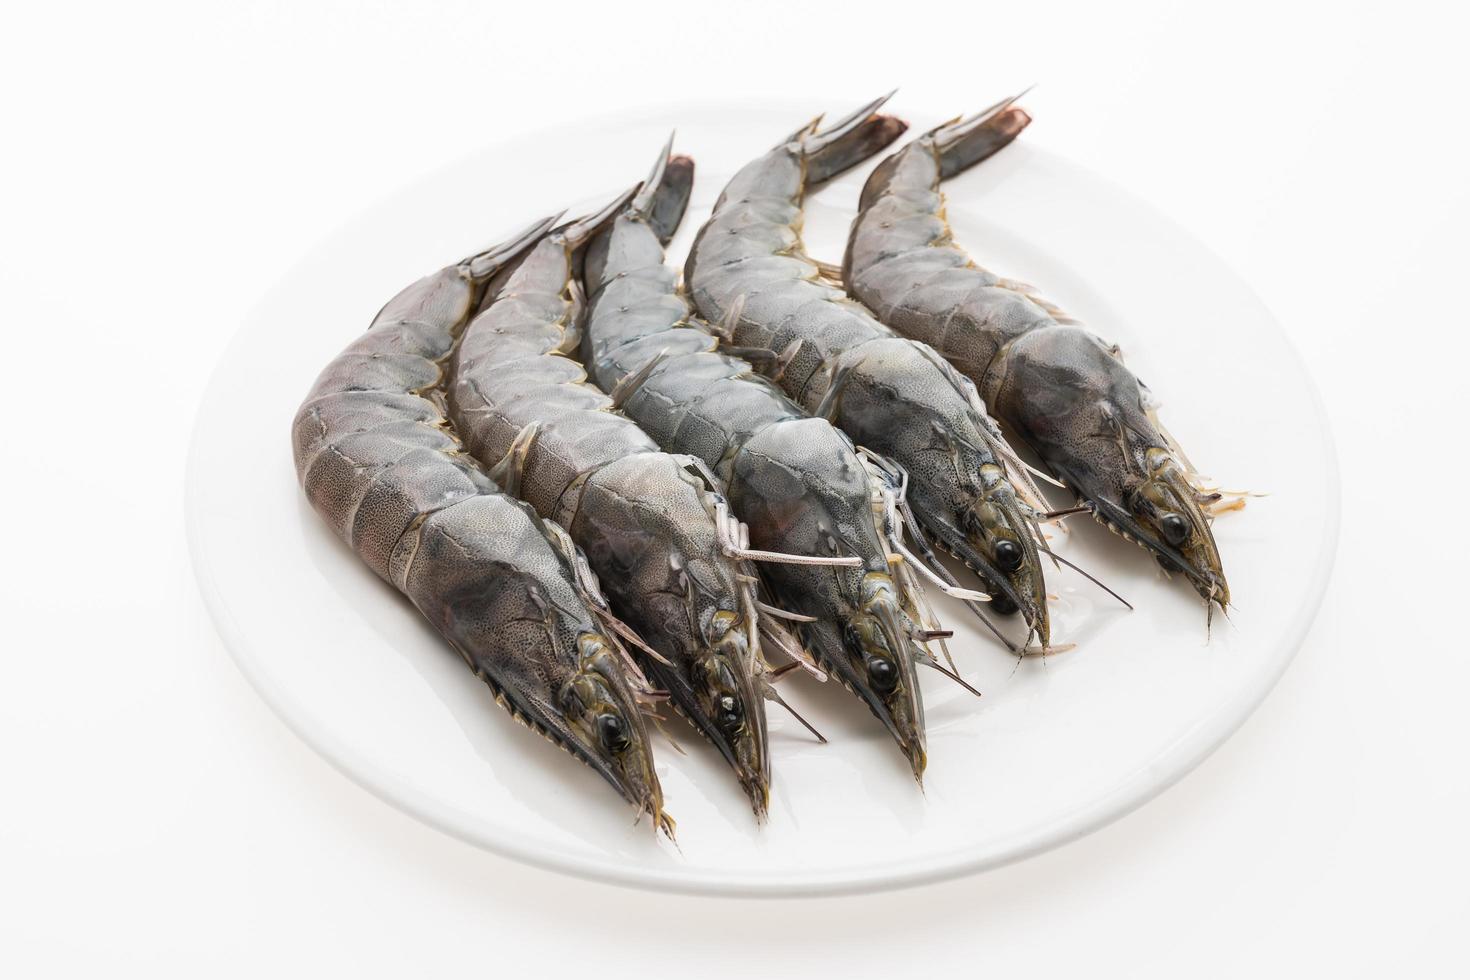 Raw fresh prawn on a white plate photo